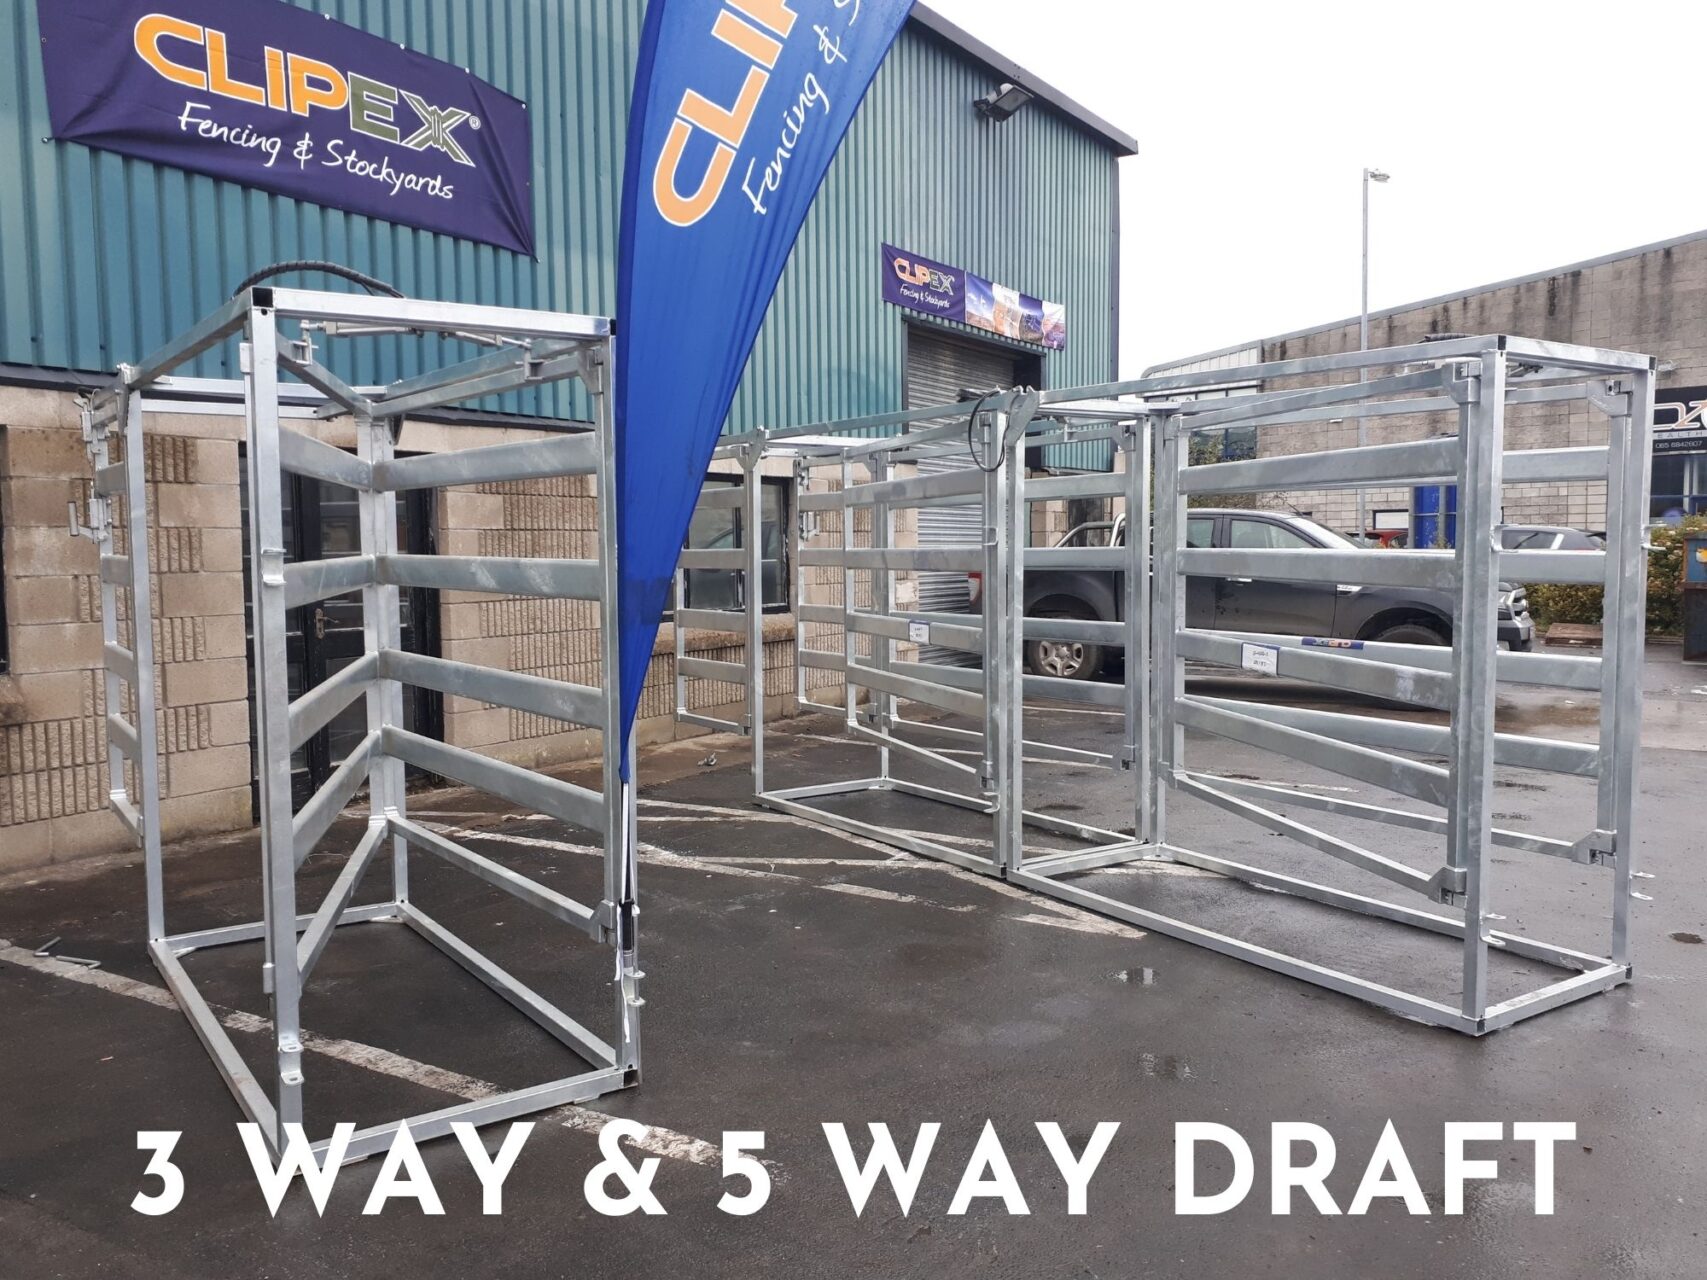 3 way & 5 way cattle draft